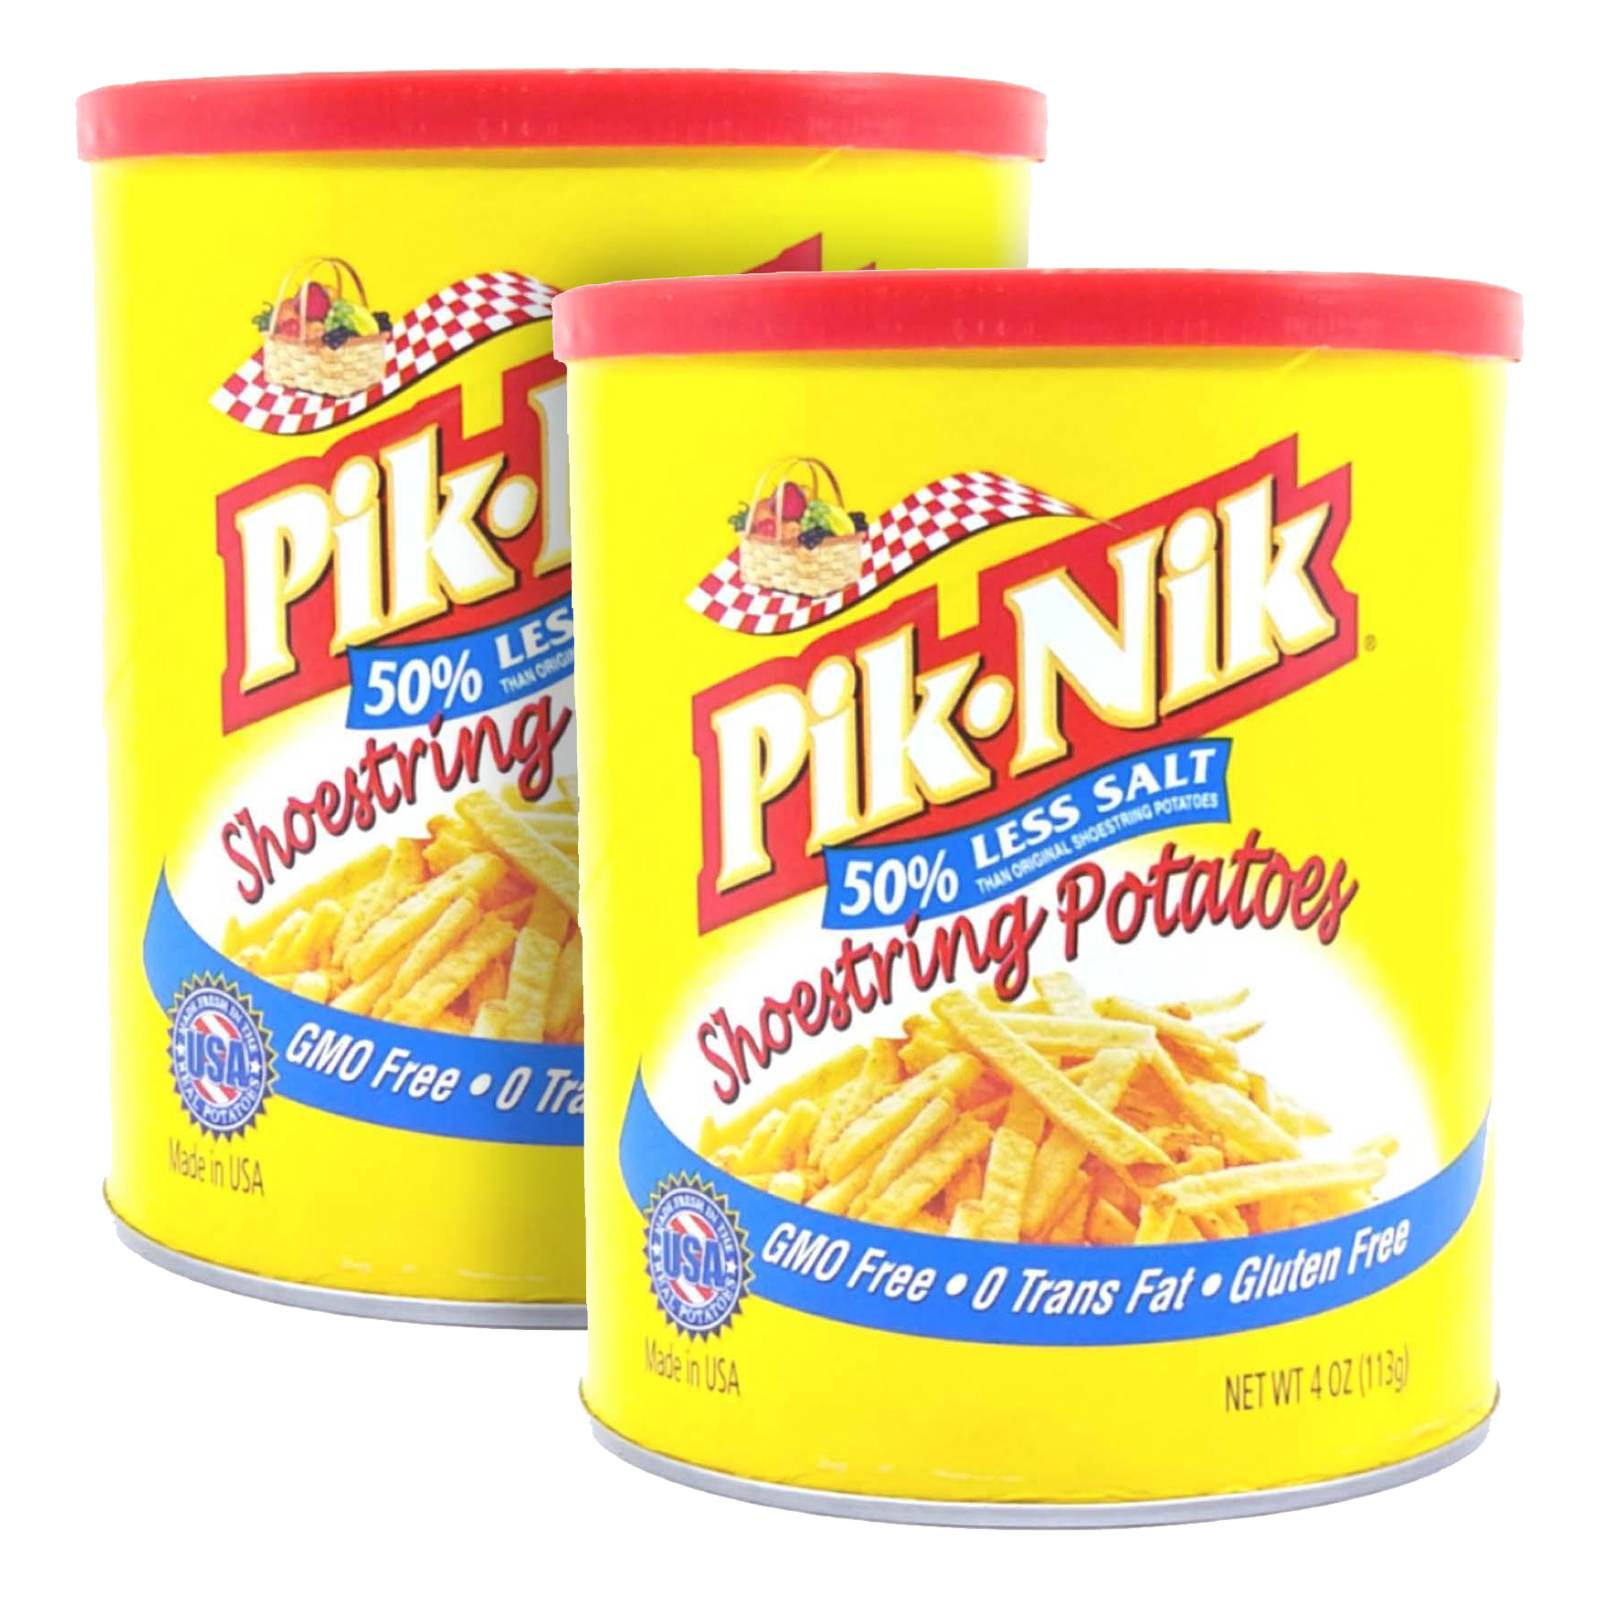 Pik-Nik 50% Less Salt Shoestring Potatoes 4oz